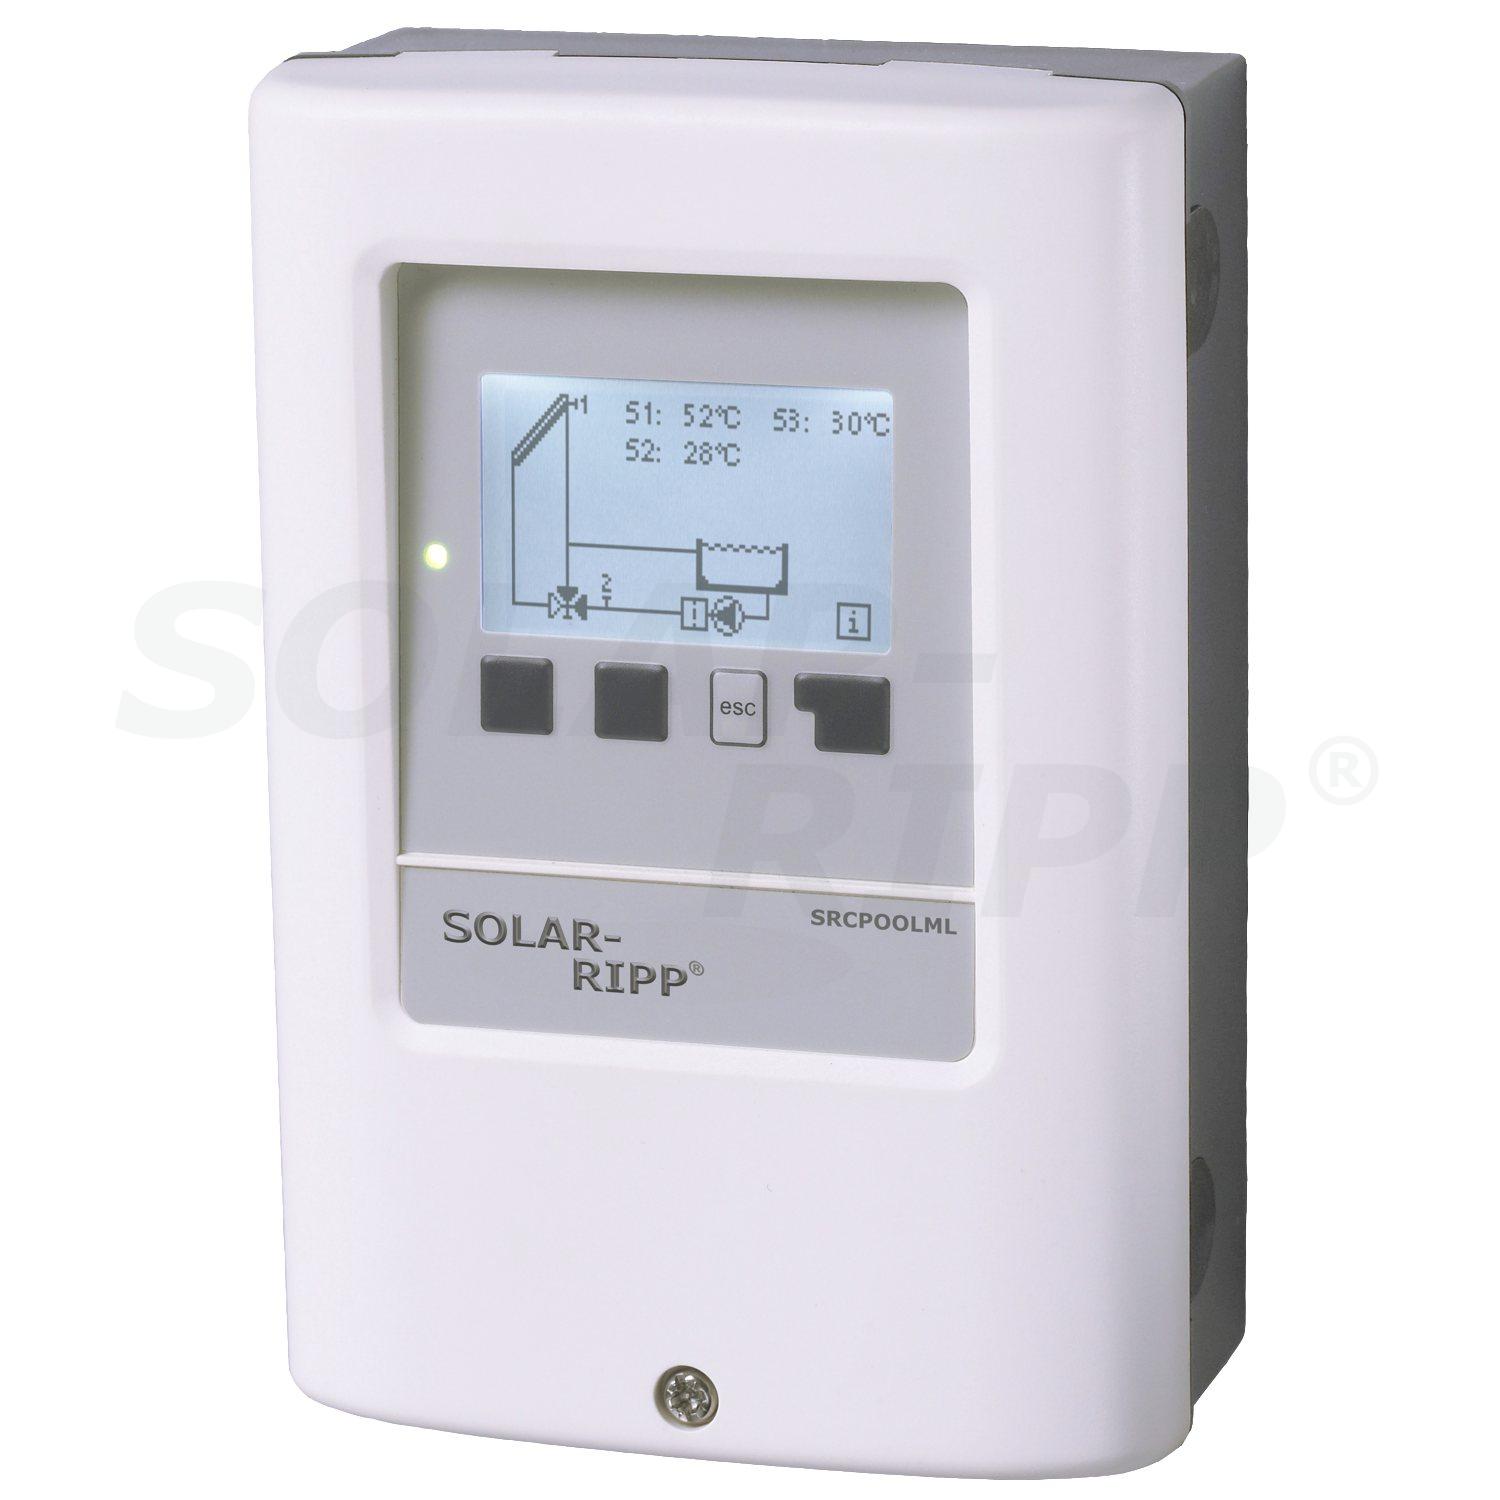 SOLAR-RIPP ® Solar Controller SRCPOOLML...